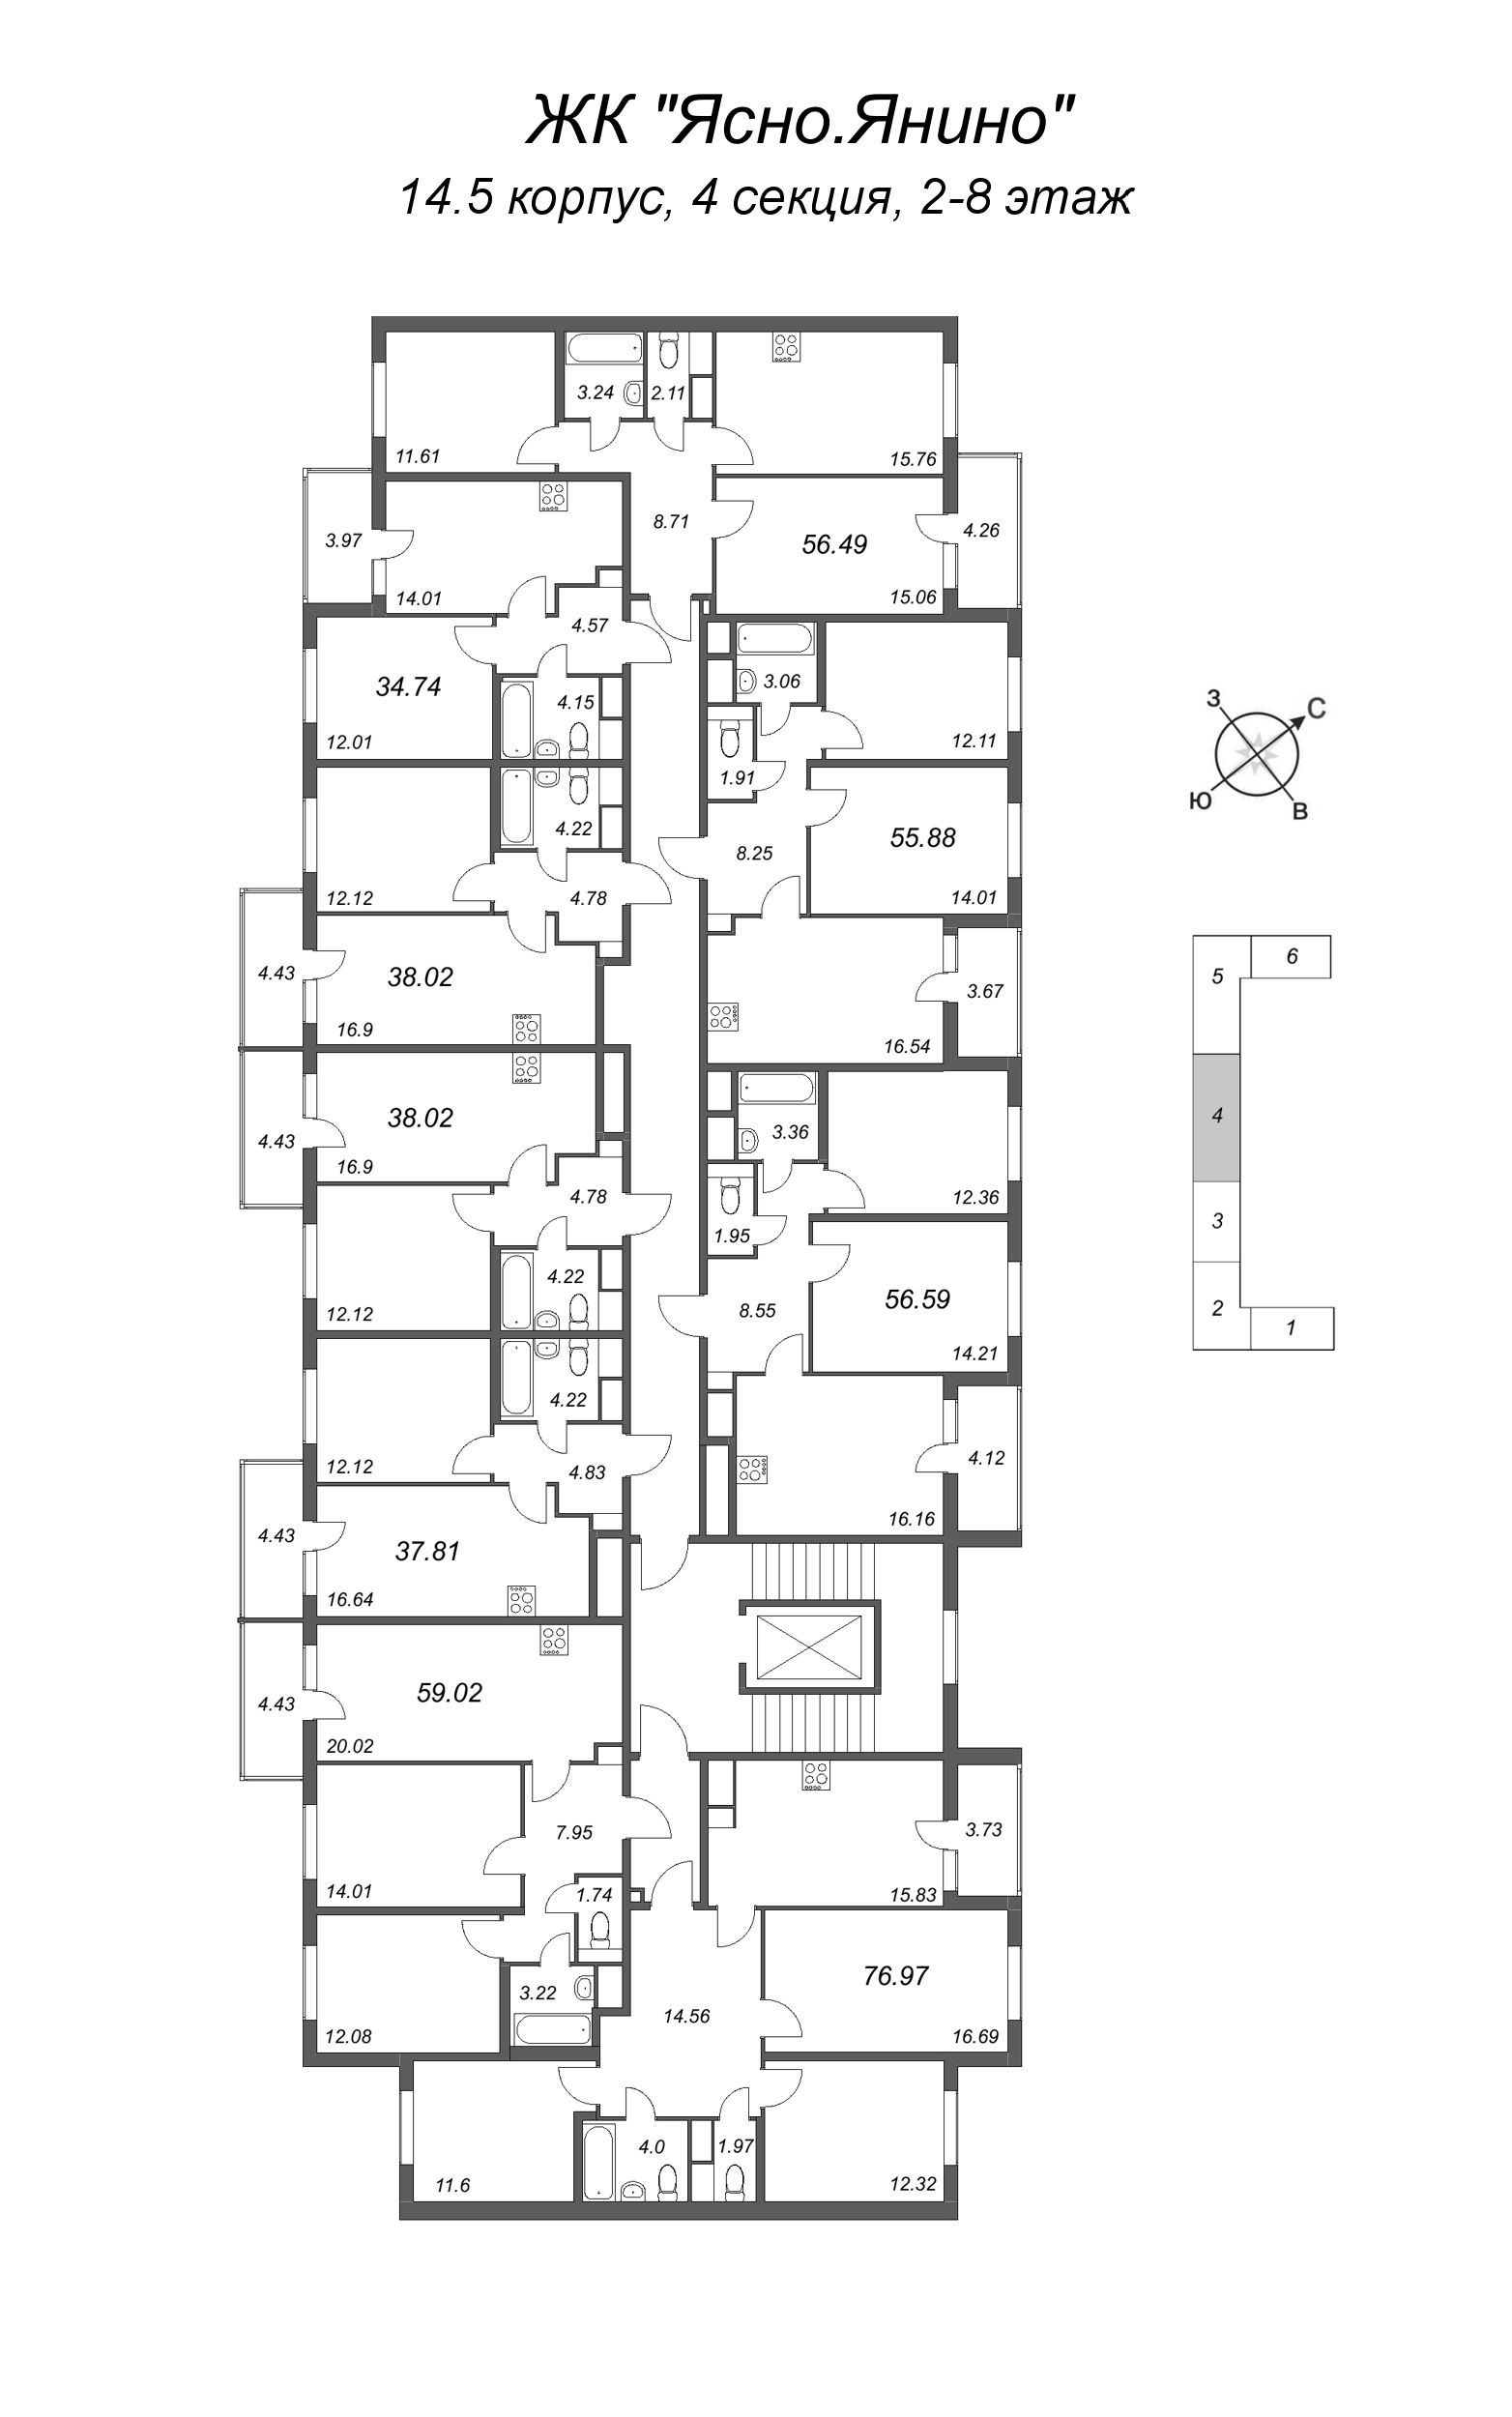 1-комнатная квартира, 34.74 м² в ЖК "Ясно.Янино" - планировка этажа